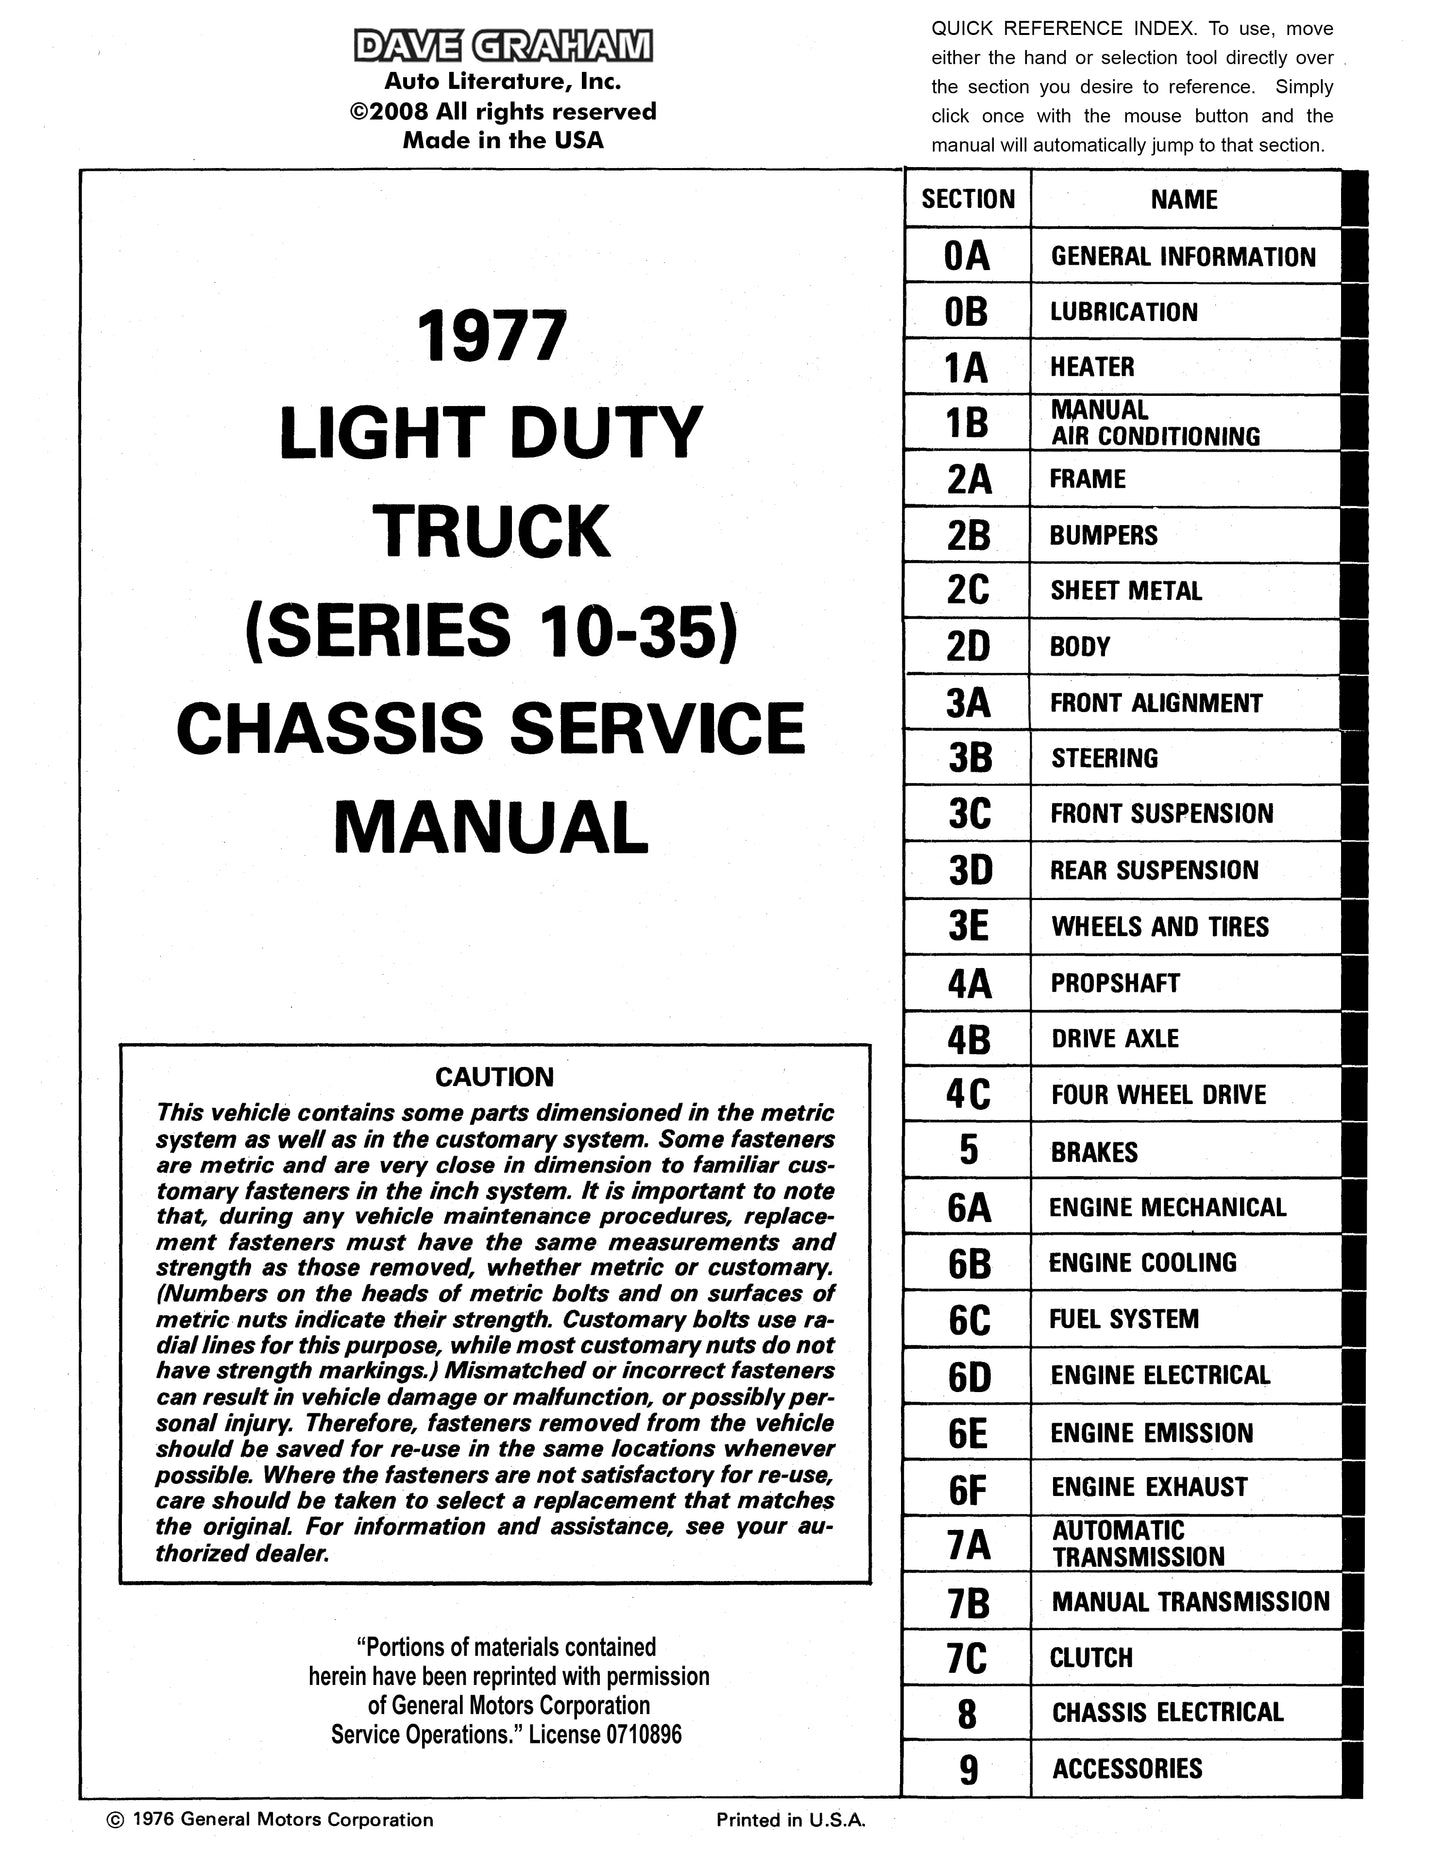 1977 Chevy Car Service, Overhaul, & Body Manuals